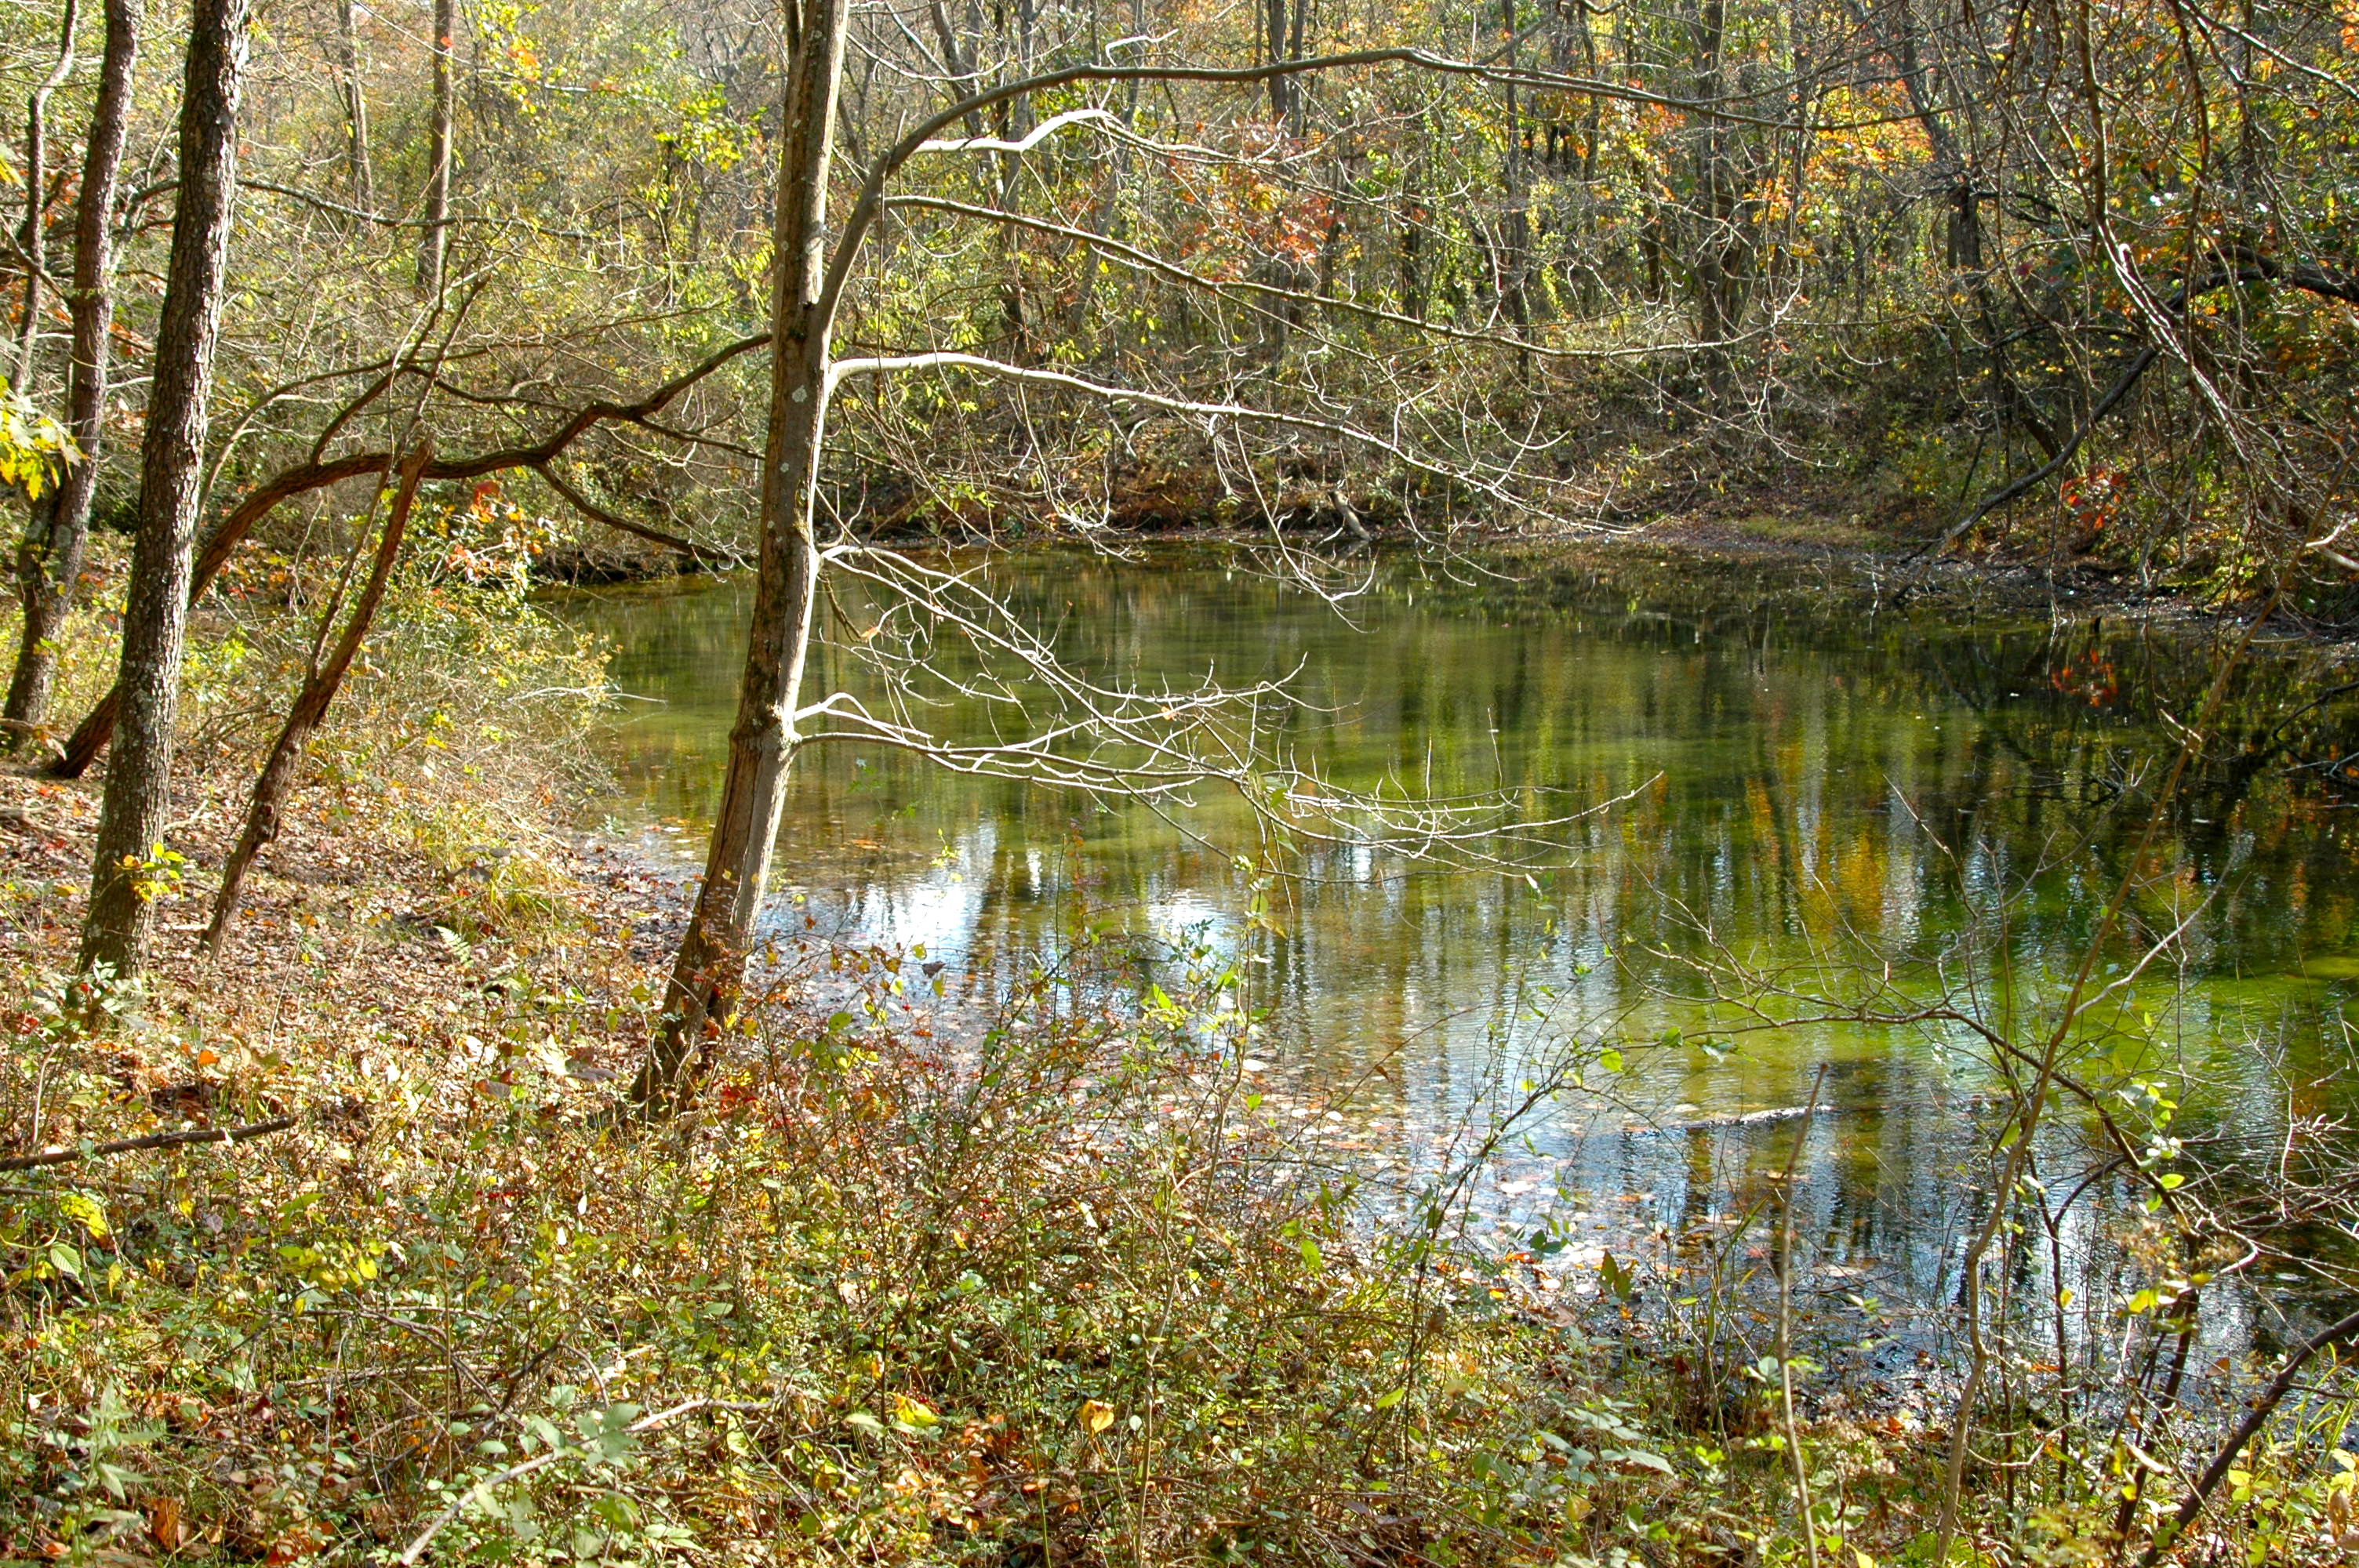 Woodland amd pond